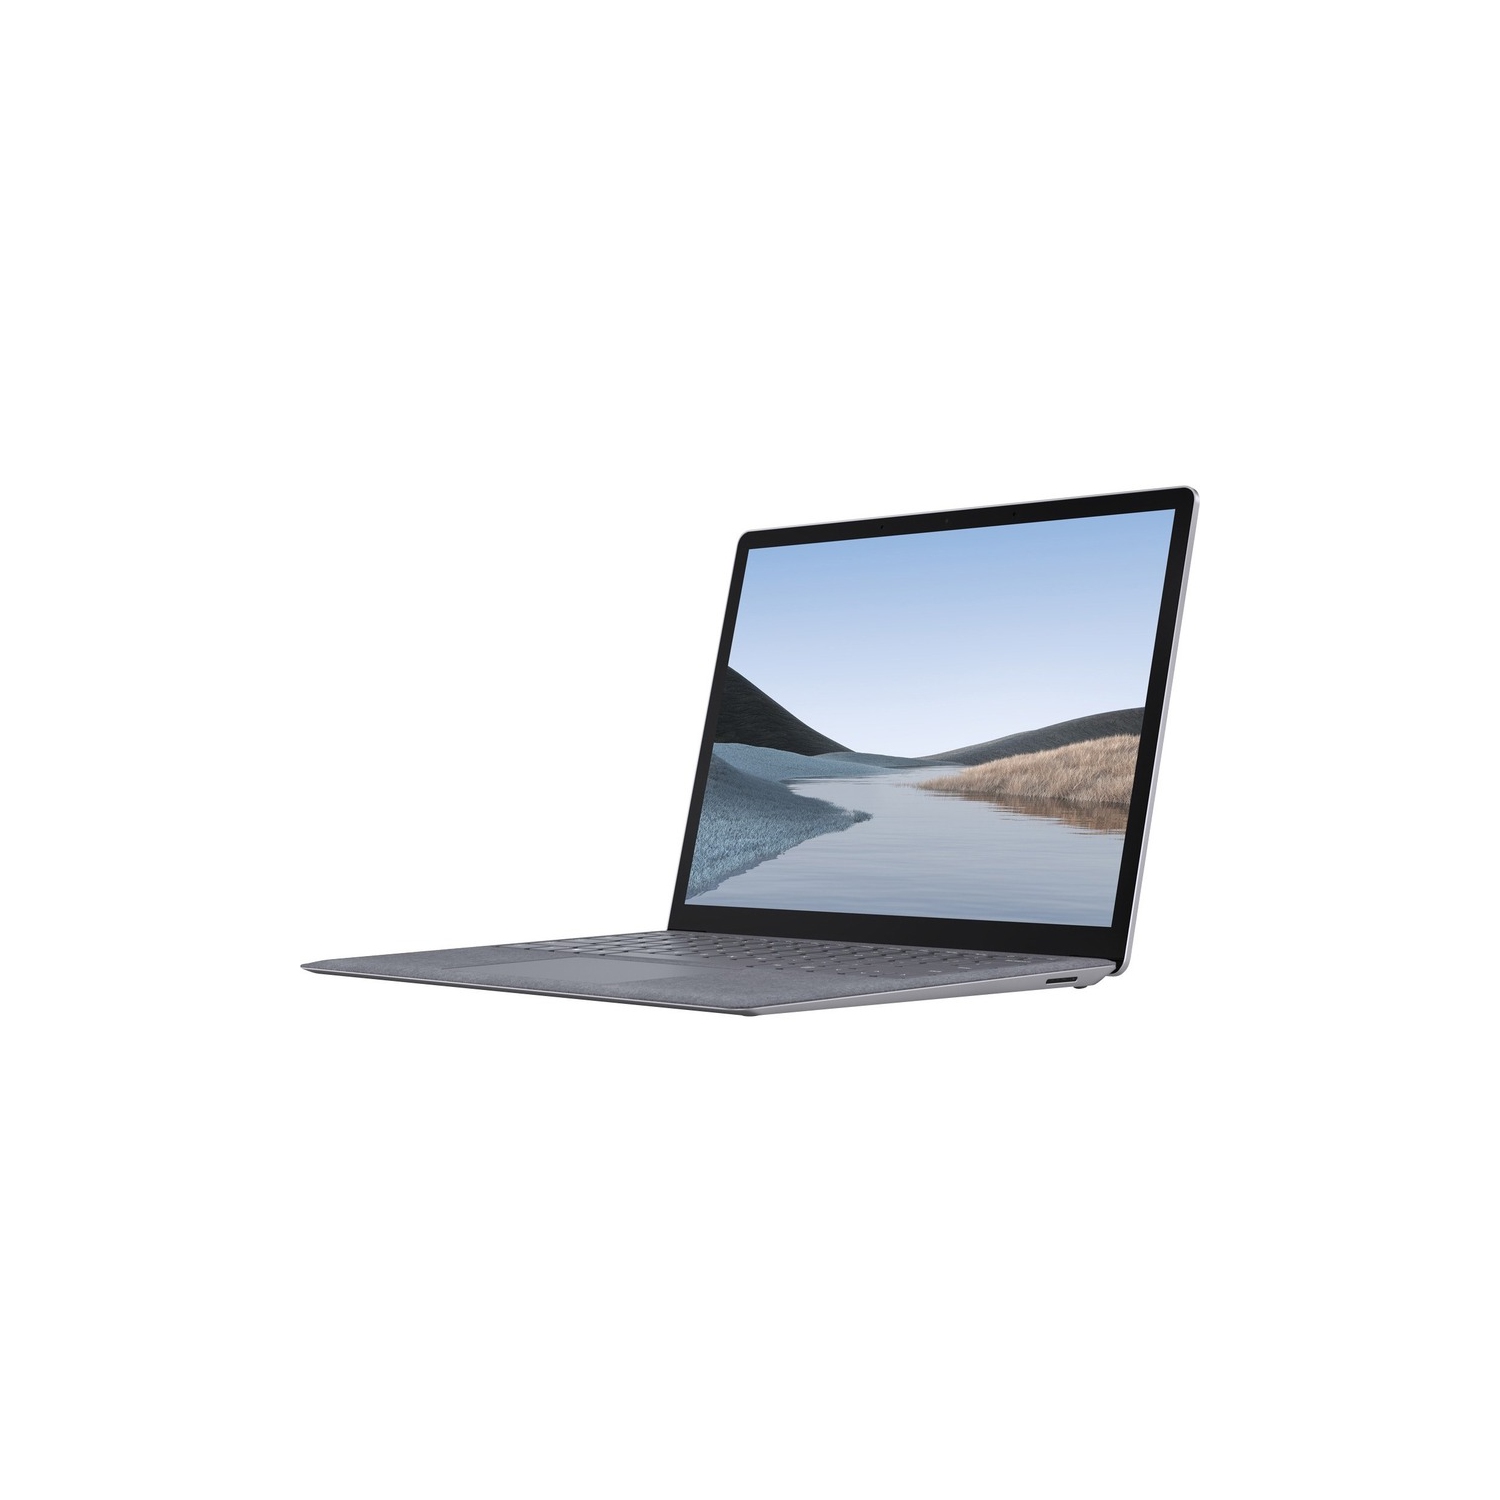 Refurbished (Good) - Microsoft Surface Laptop 3 3 13.5" Touchscreen Notebook Intel i5-1035G3 16 GB LPDDR4 256 GB SSD Windows 10 Pro 64-Bit